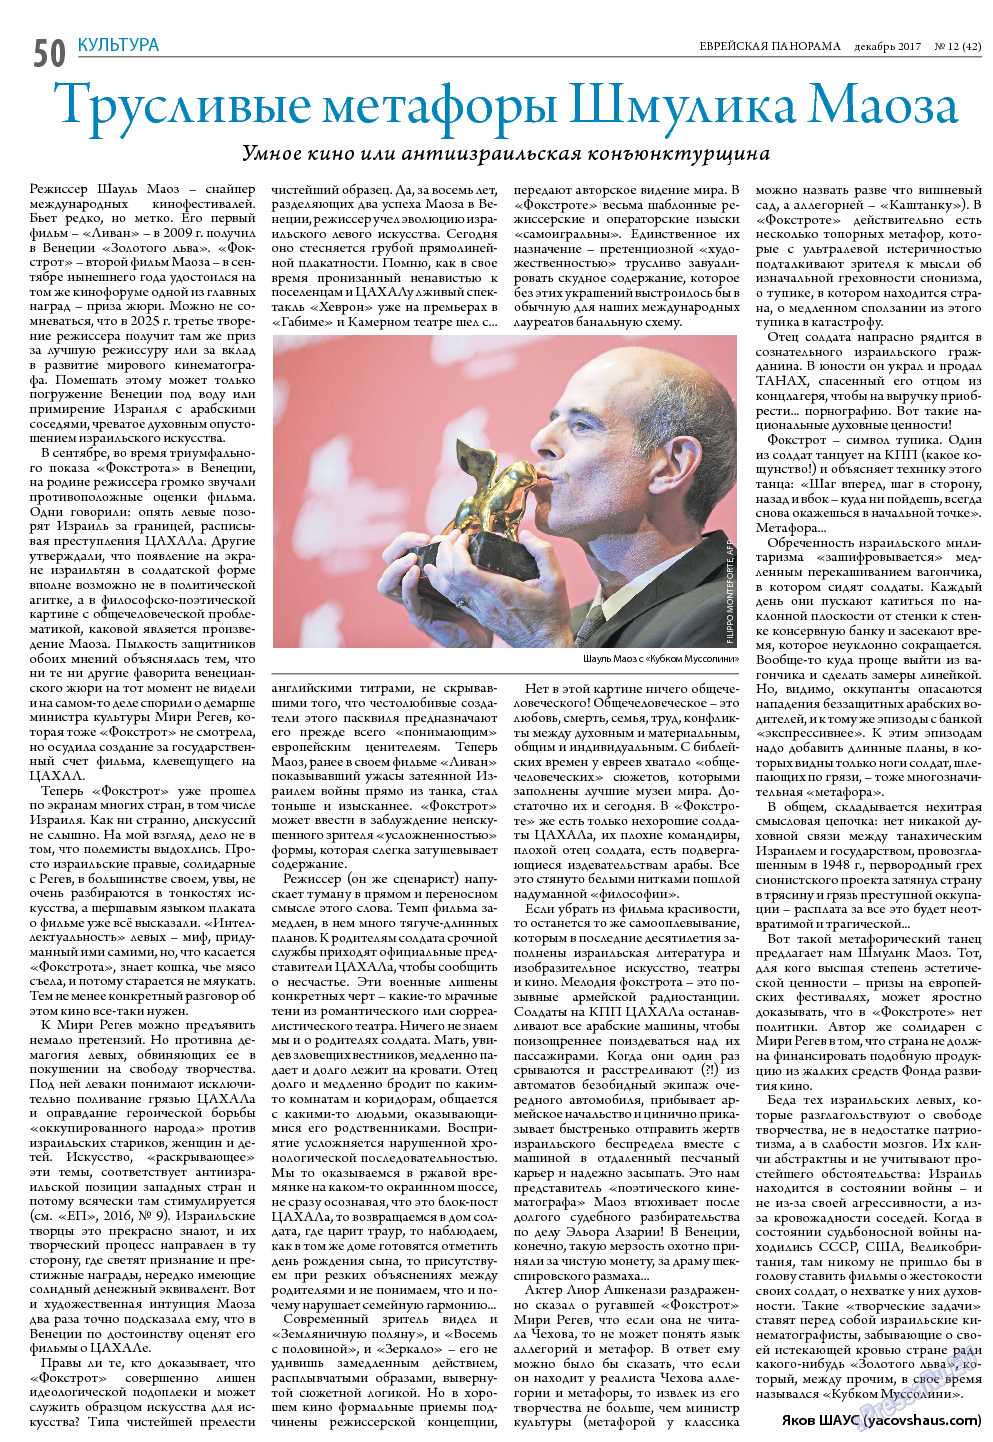 Еврейская панорама, газета. 2017 №12 стр.50